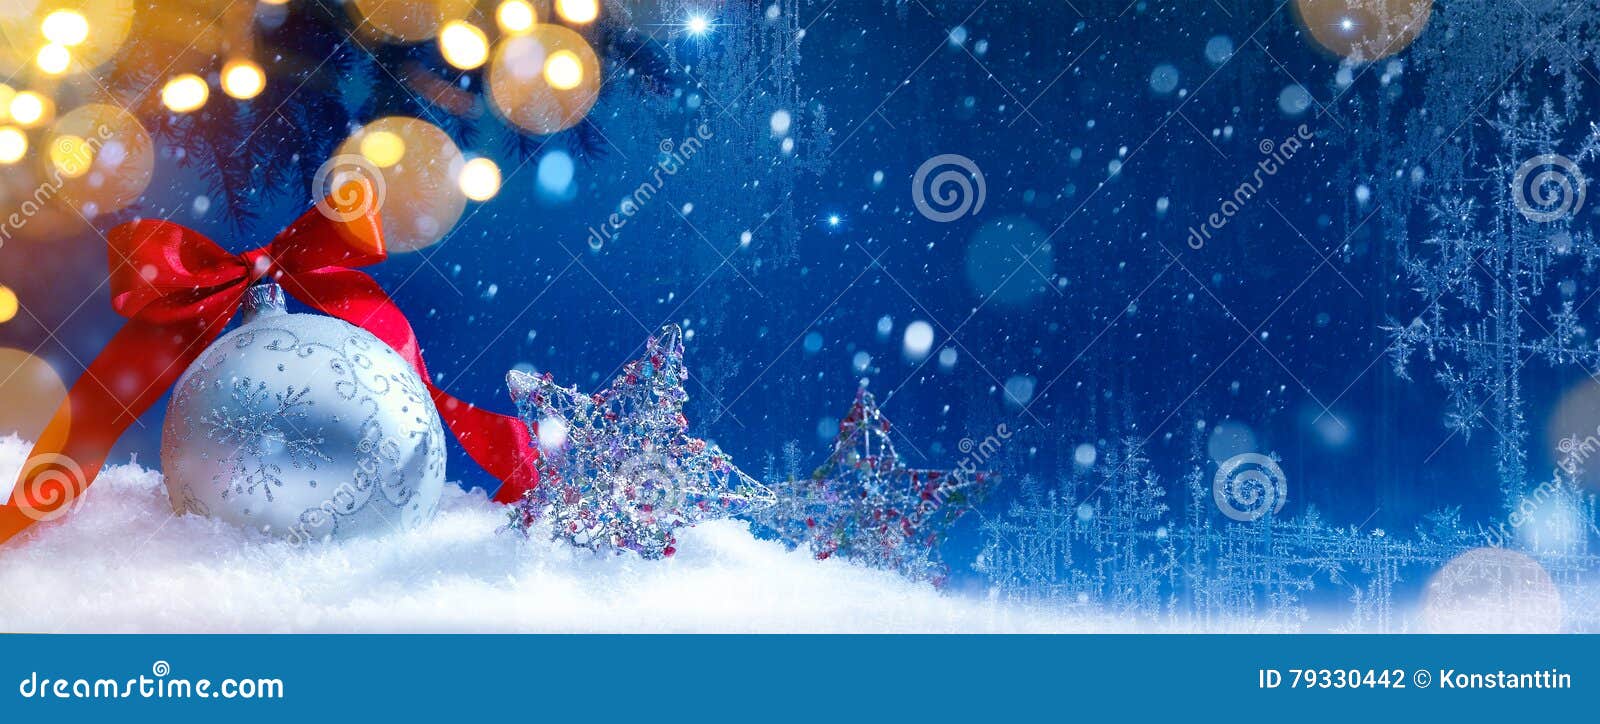 Art Blue Snow Christmas Holidays Lights Background Stock Photo - Image ...